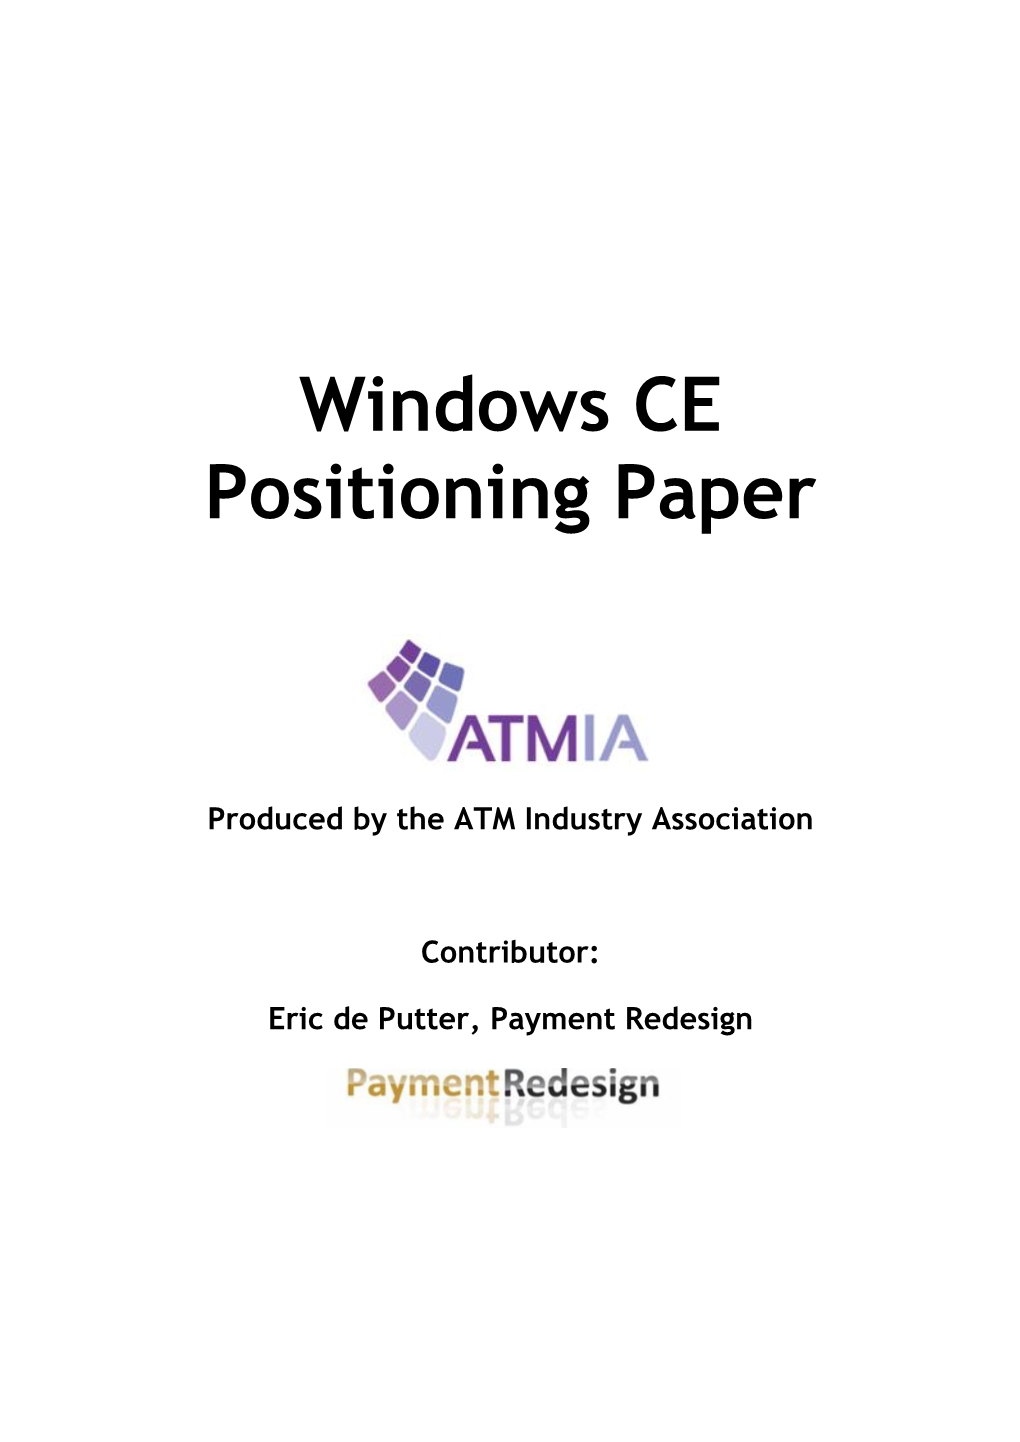 Windows CE Positioning Paper